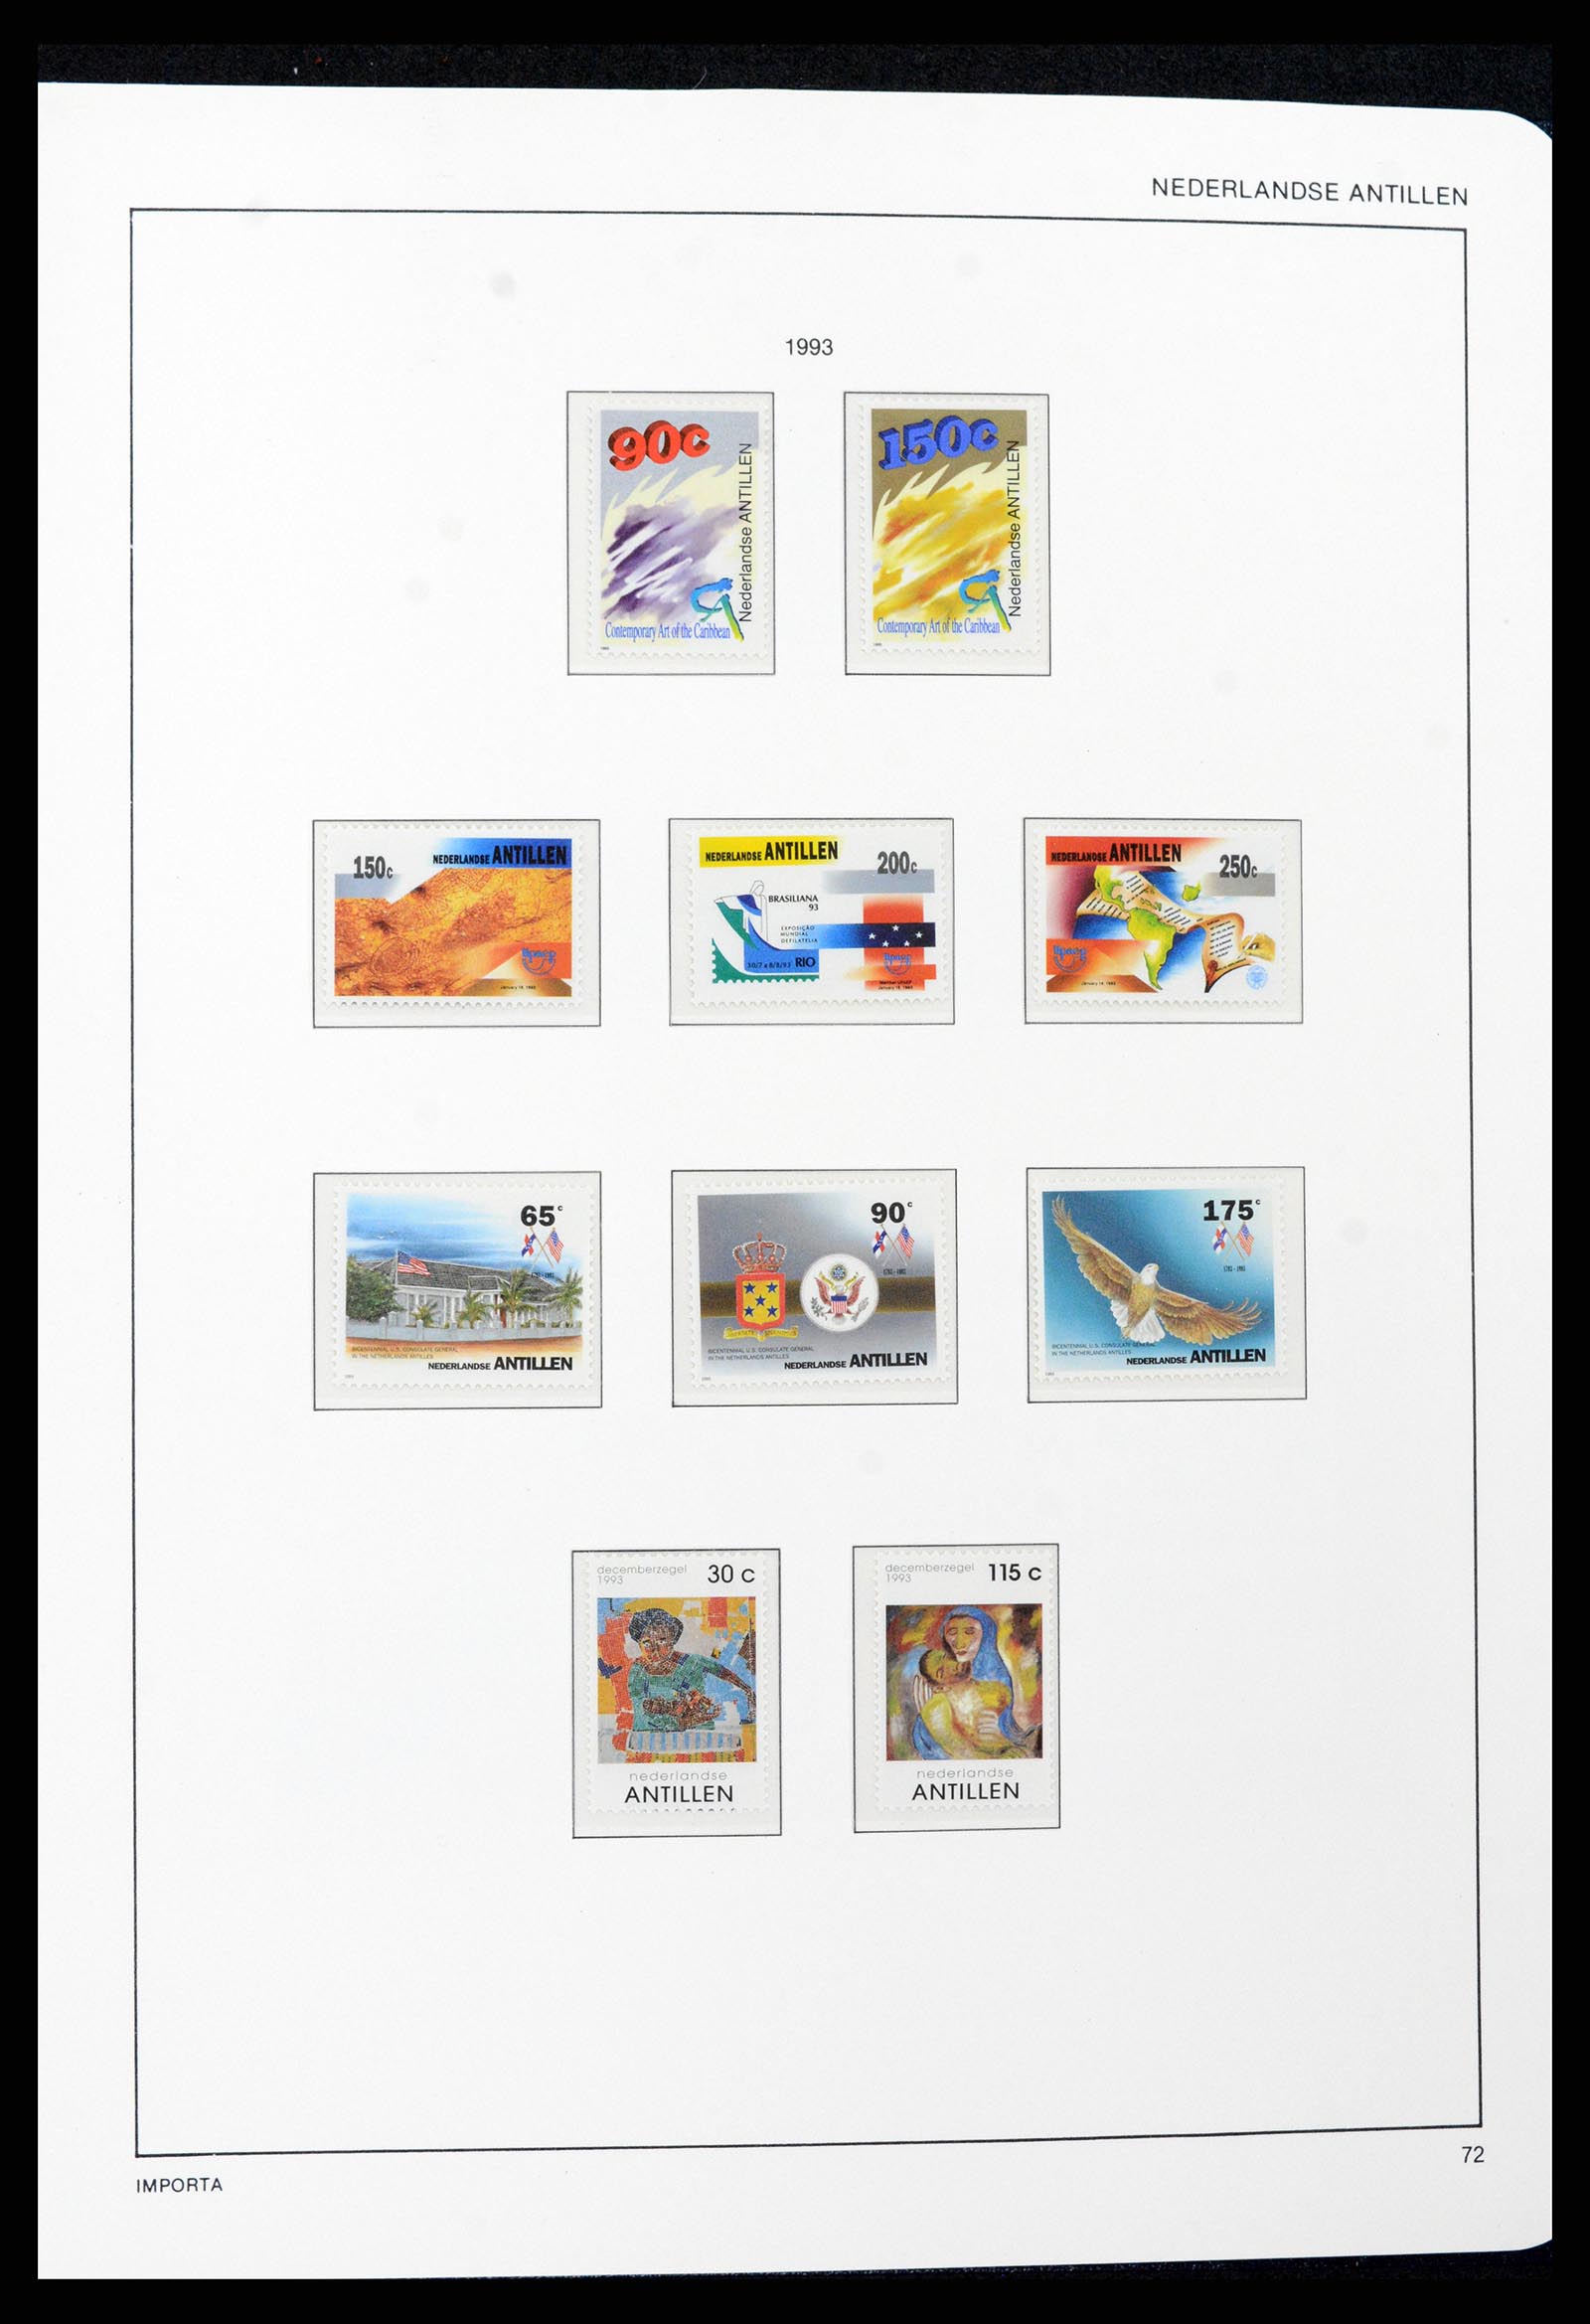 37693 073 - Stamp collection 37693 Netherlands Antilles 1949-2001.